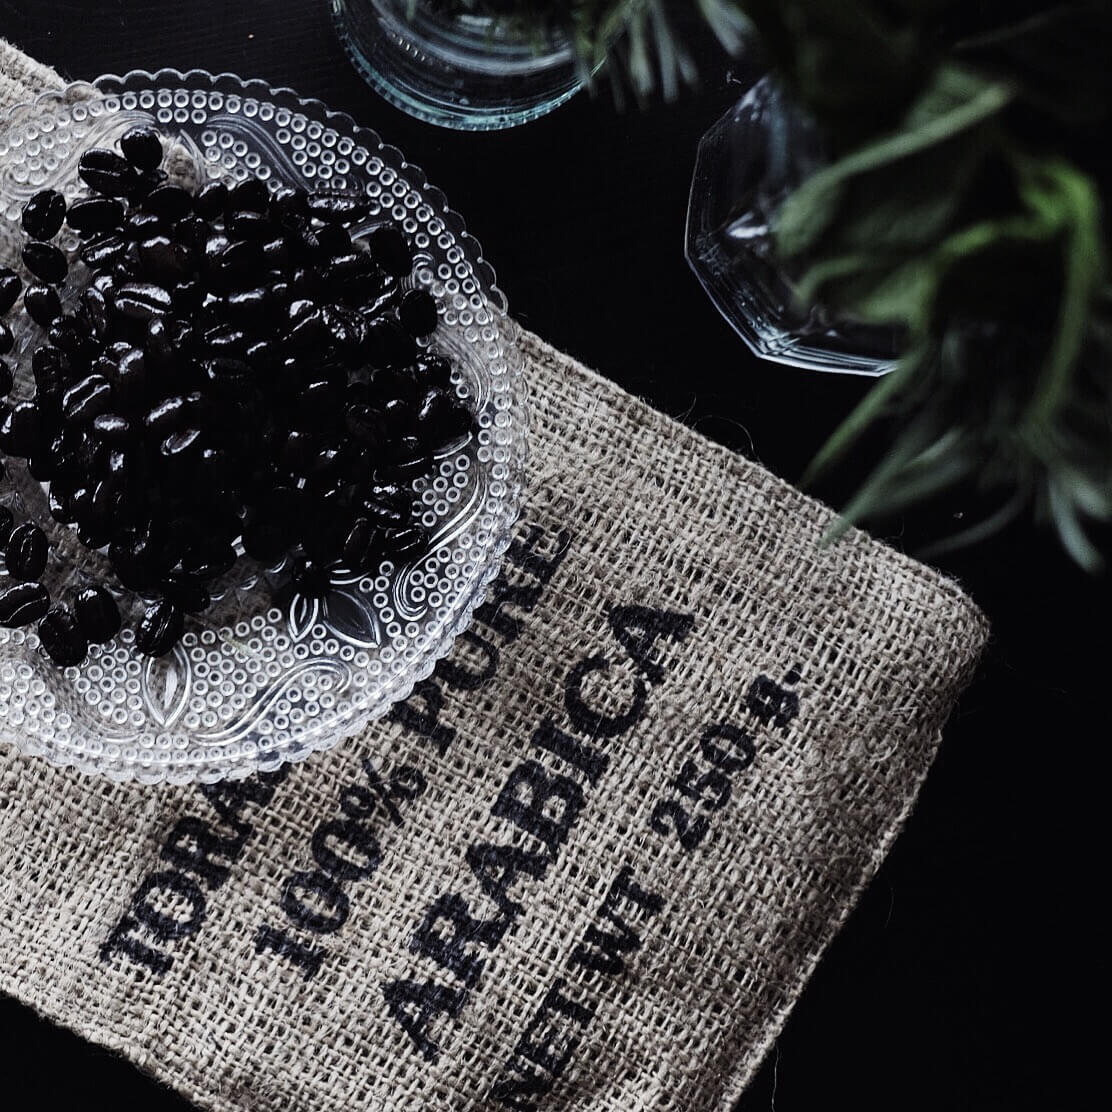 The Most Amazing Organic Coconut Oil and Coffee Scrub Recipe